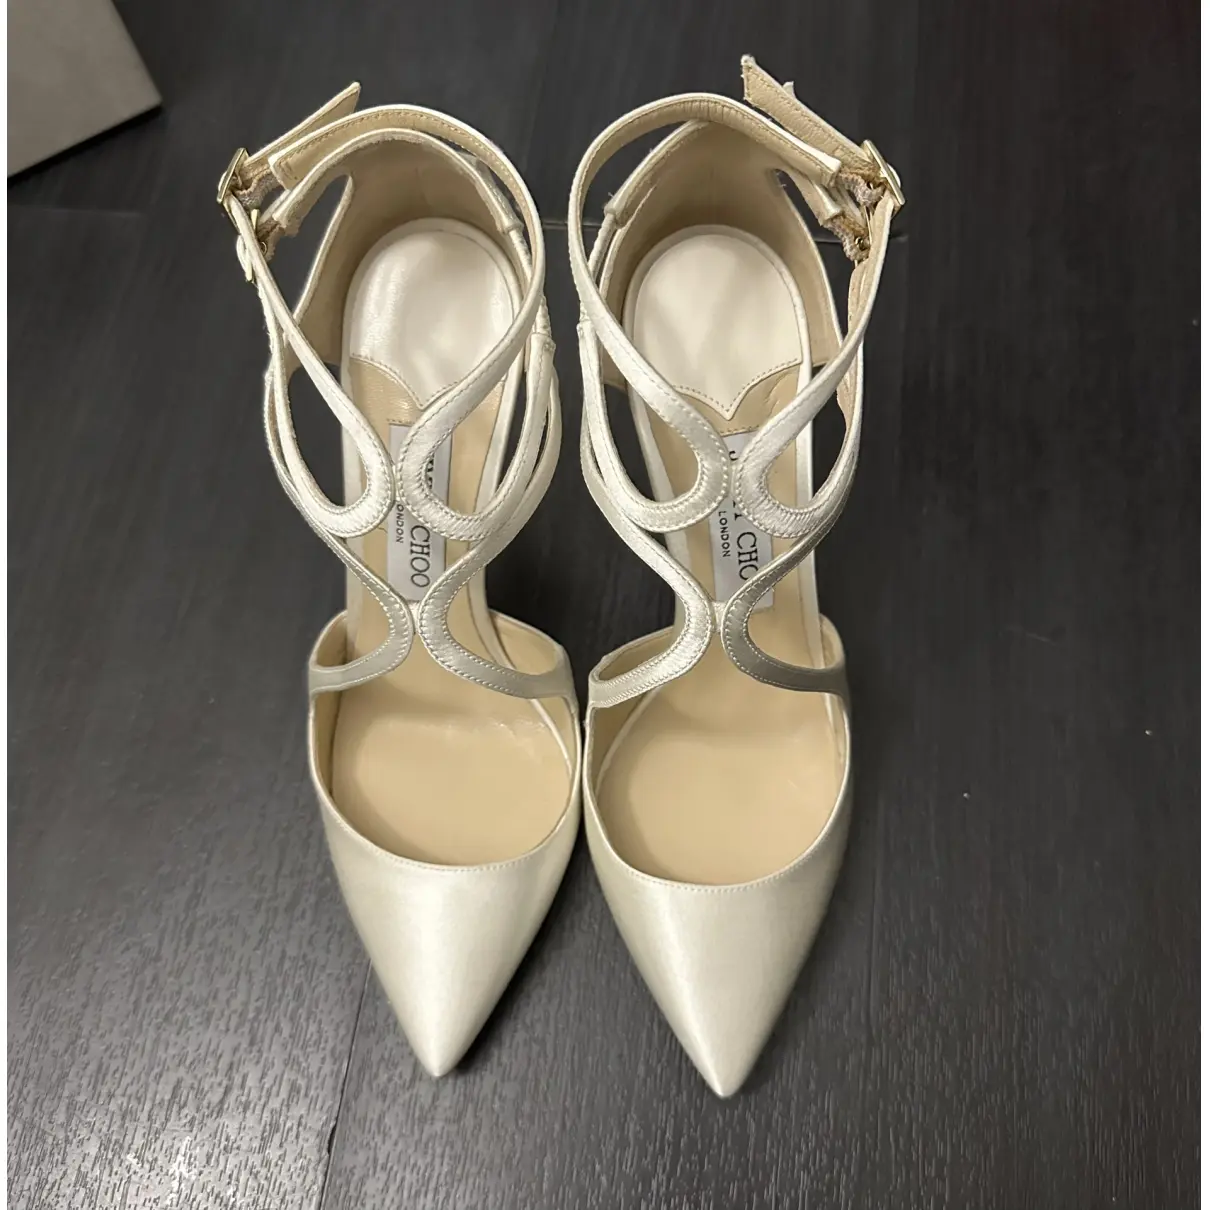 Buy Jimmy Choo Lancer glitter heels online